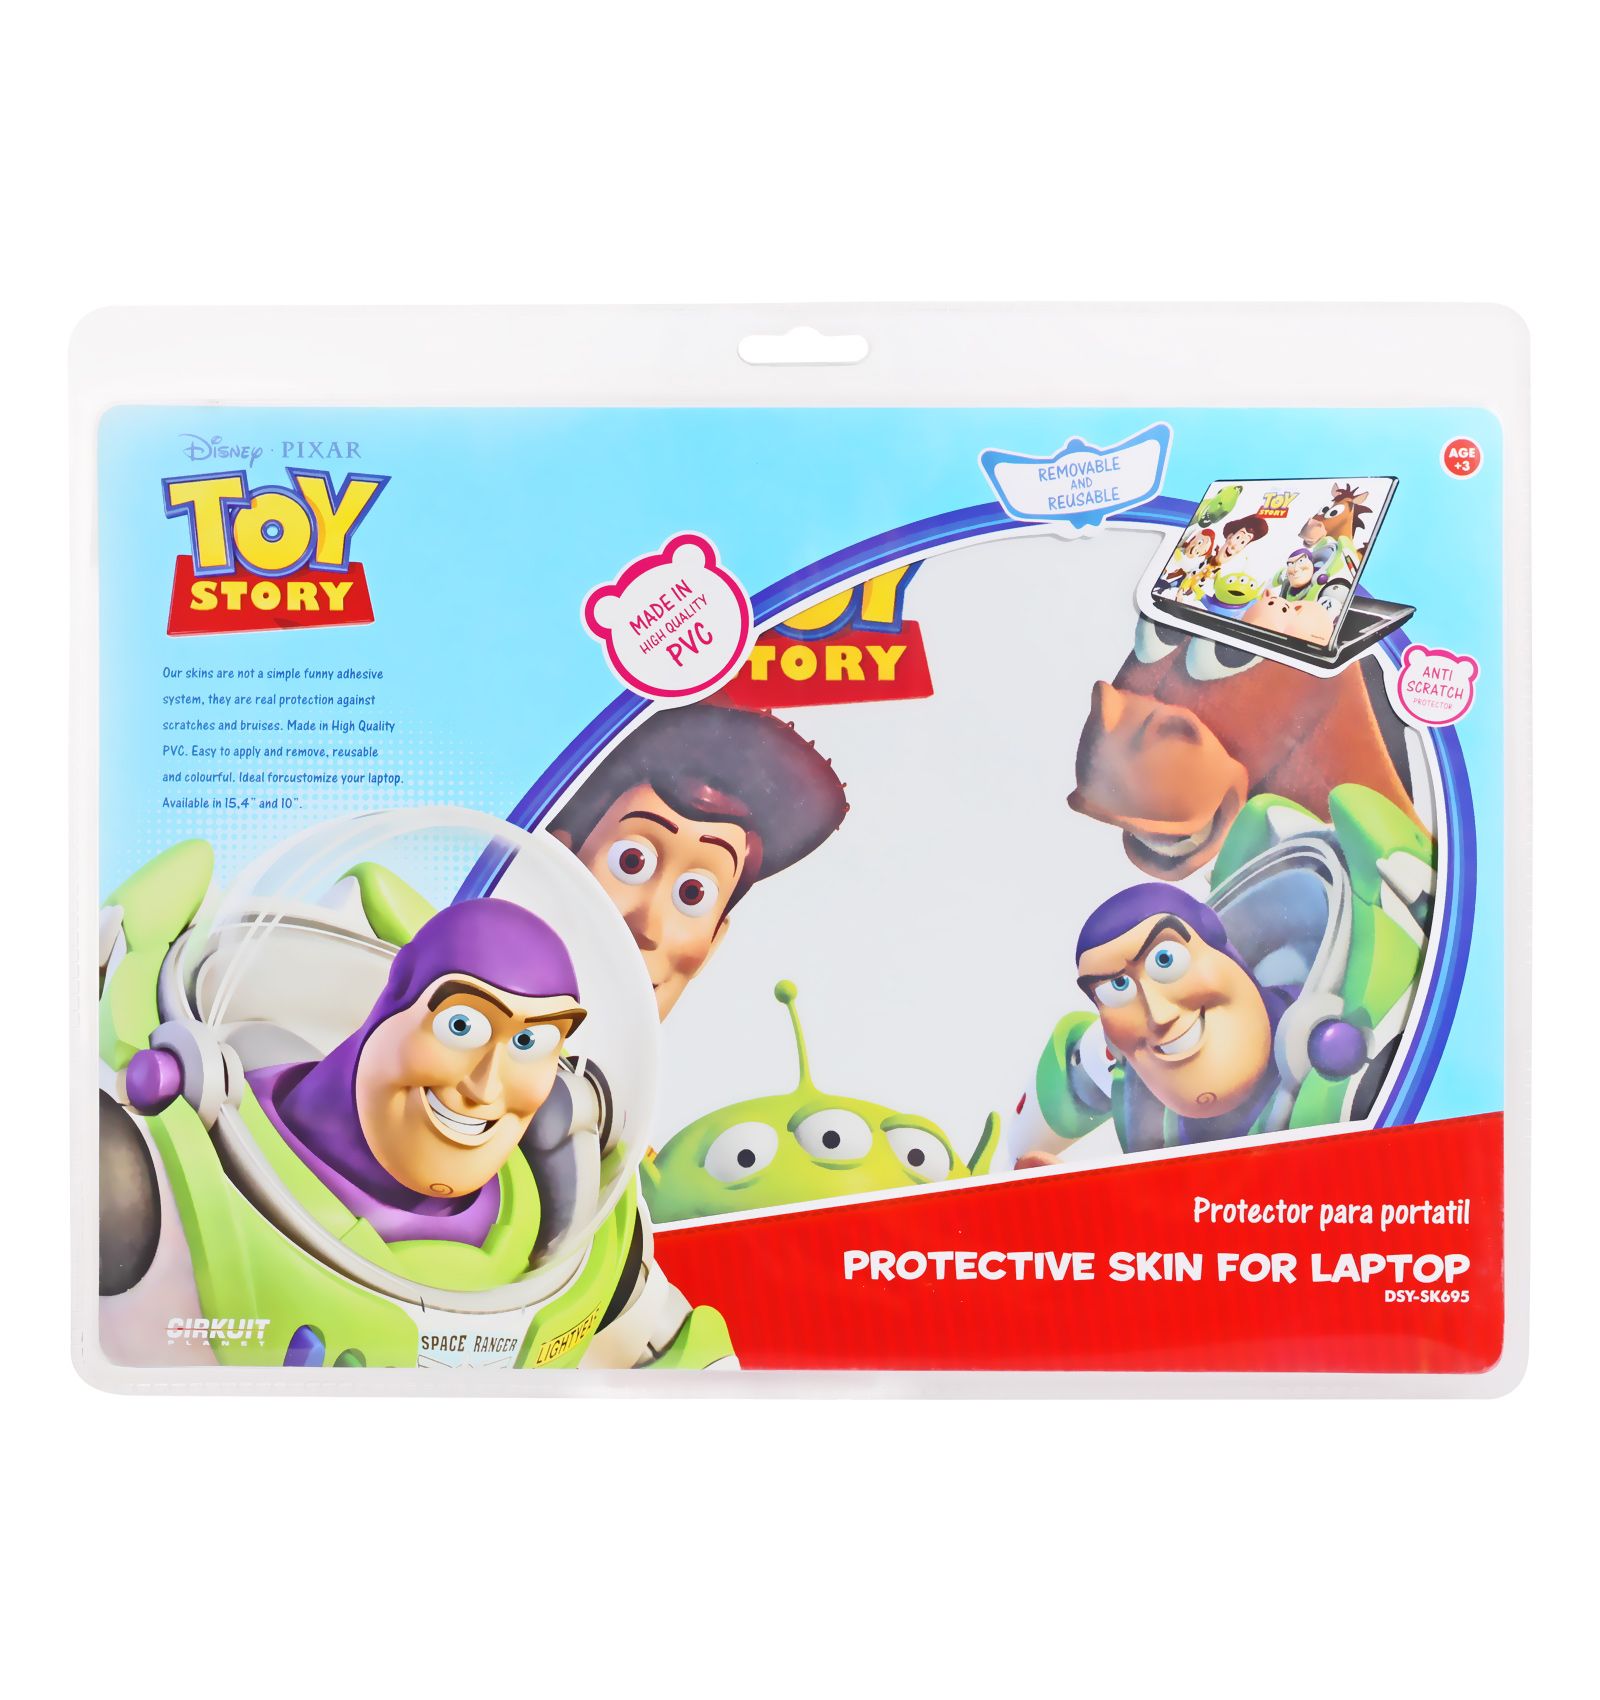 Disney Pixar Toy Story  Protective Skin For Laptop